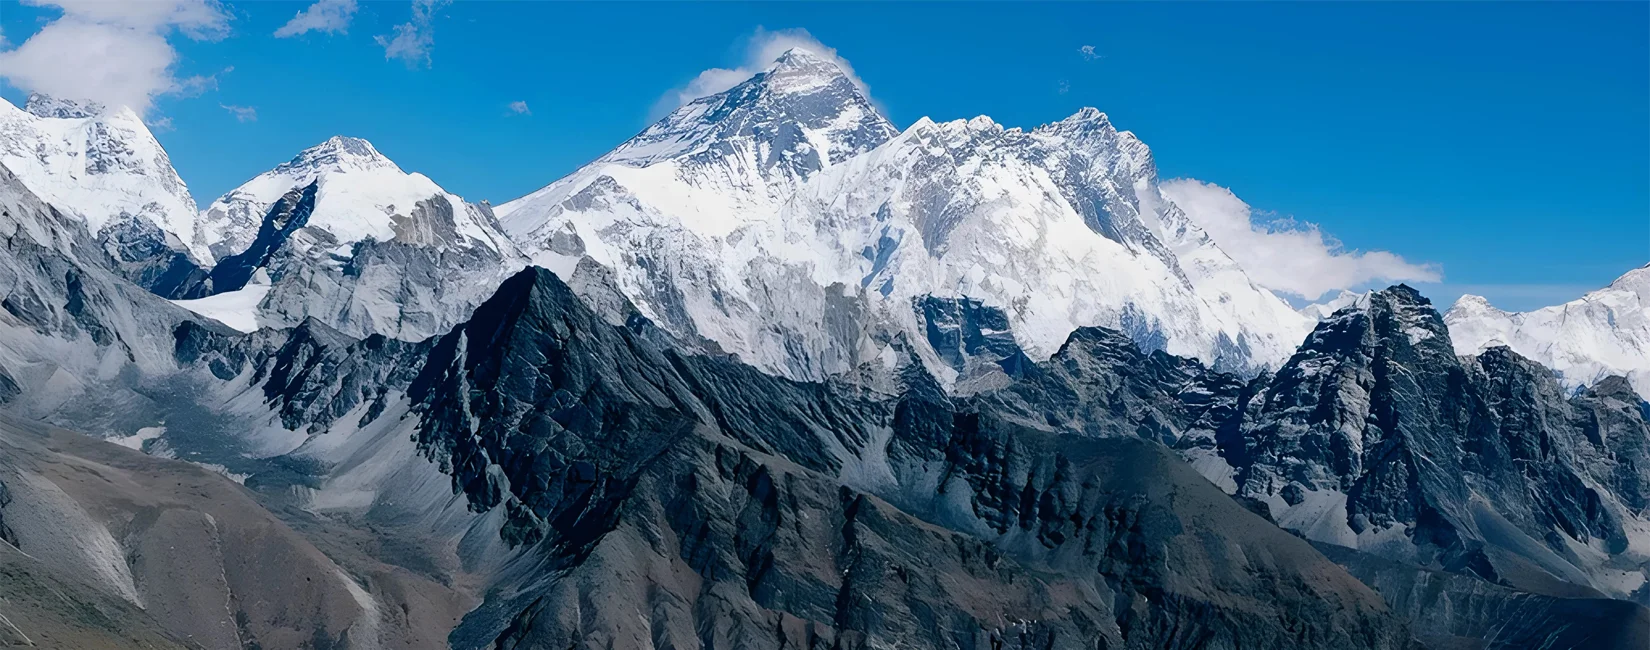 Cho la Pass Trek via Everest Base Camp